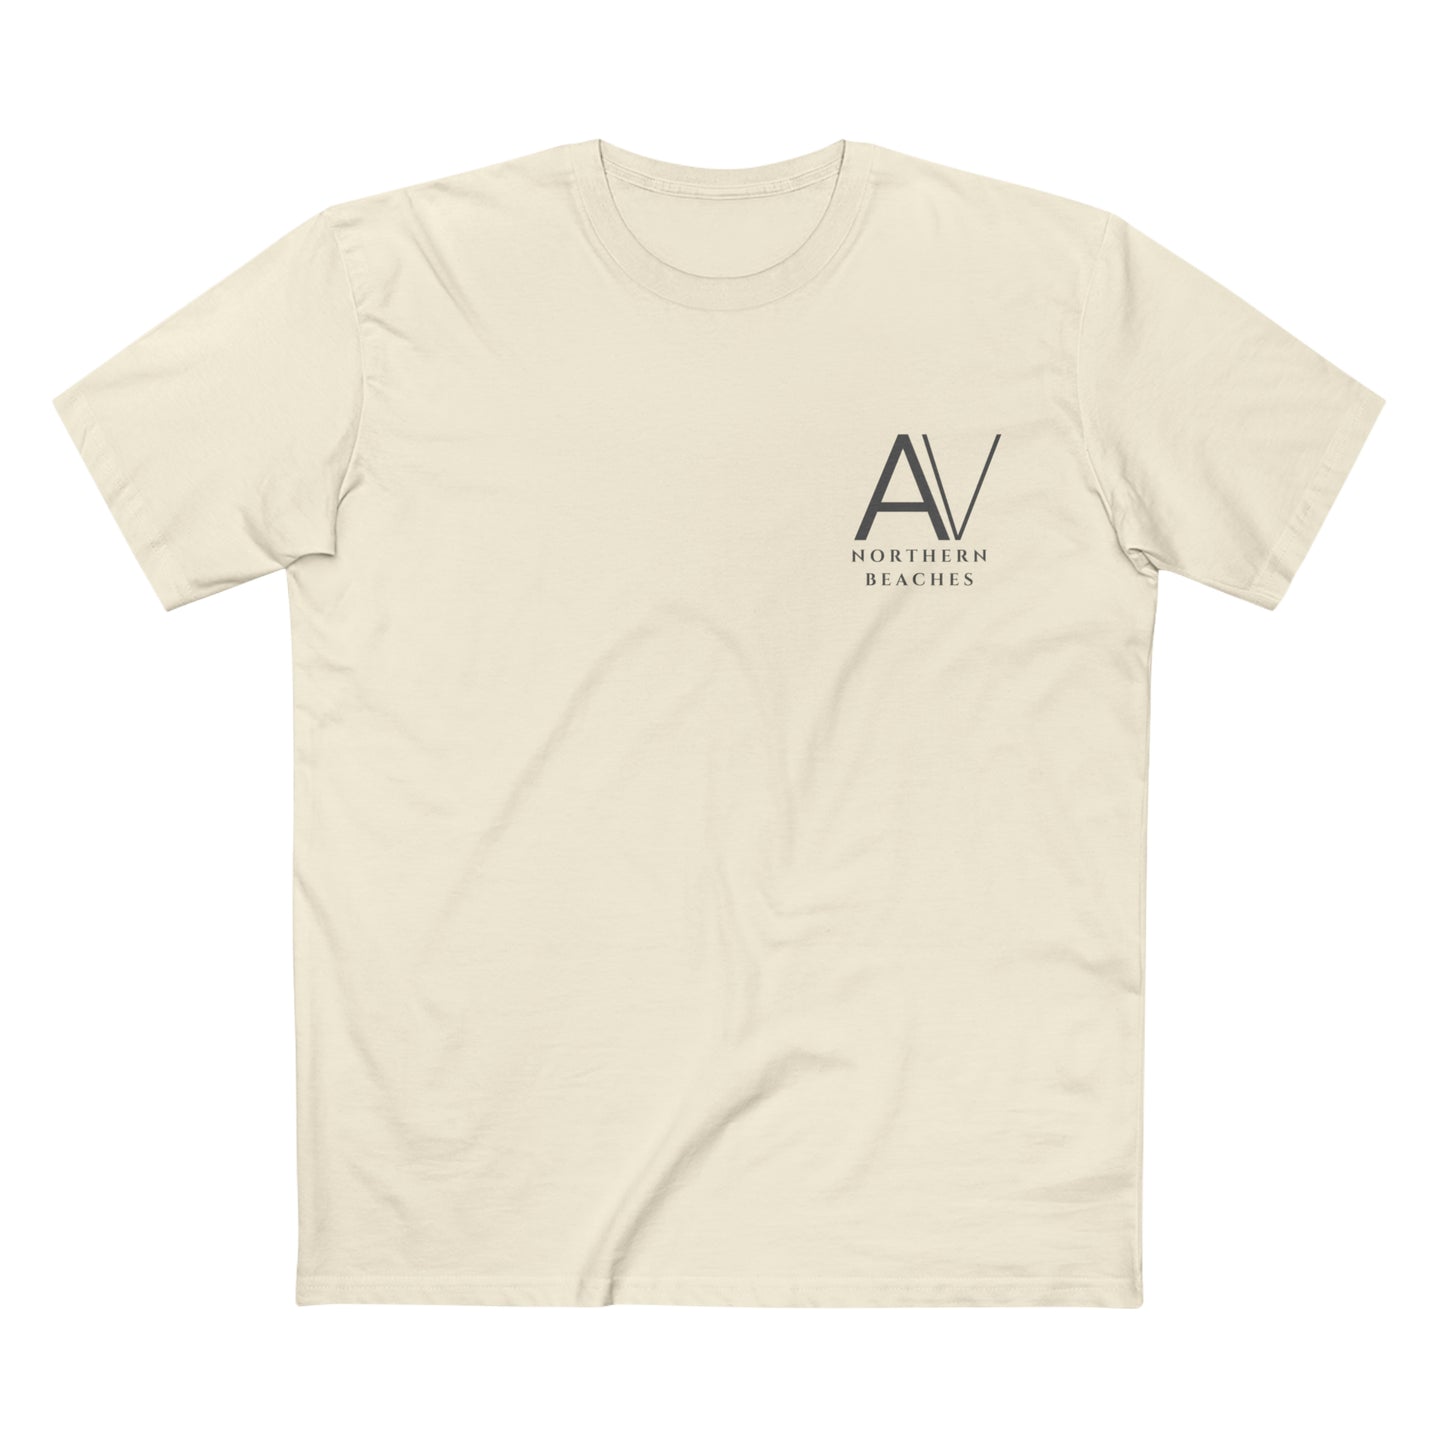 Comfy Cotton T-Shirt Northern Beaches Avalon logo